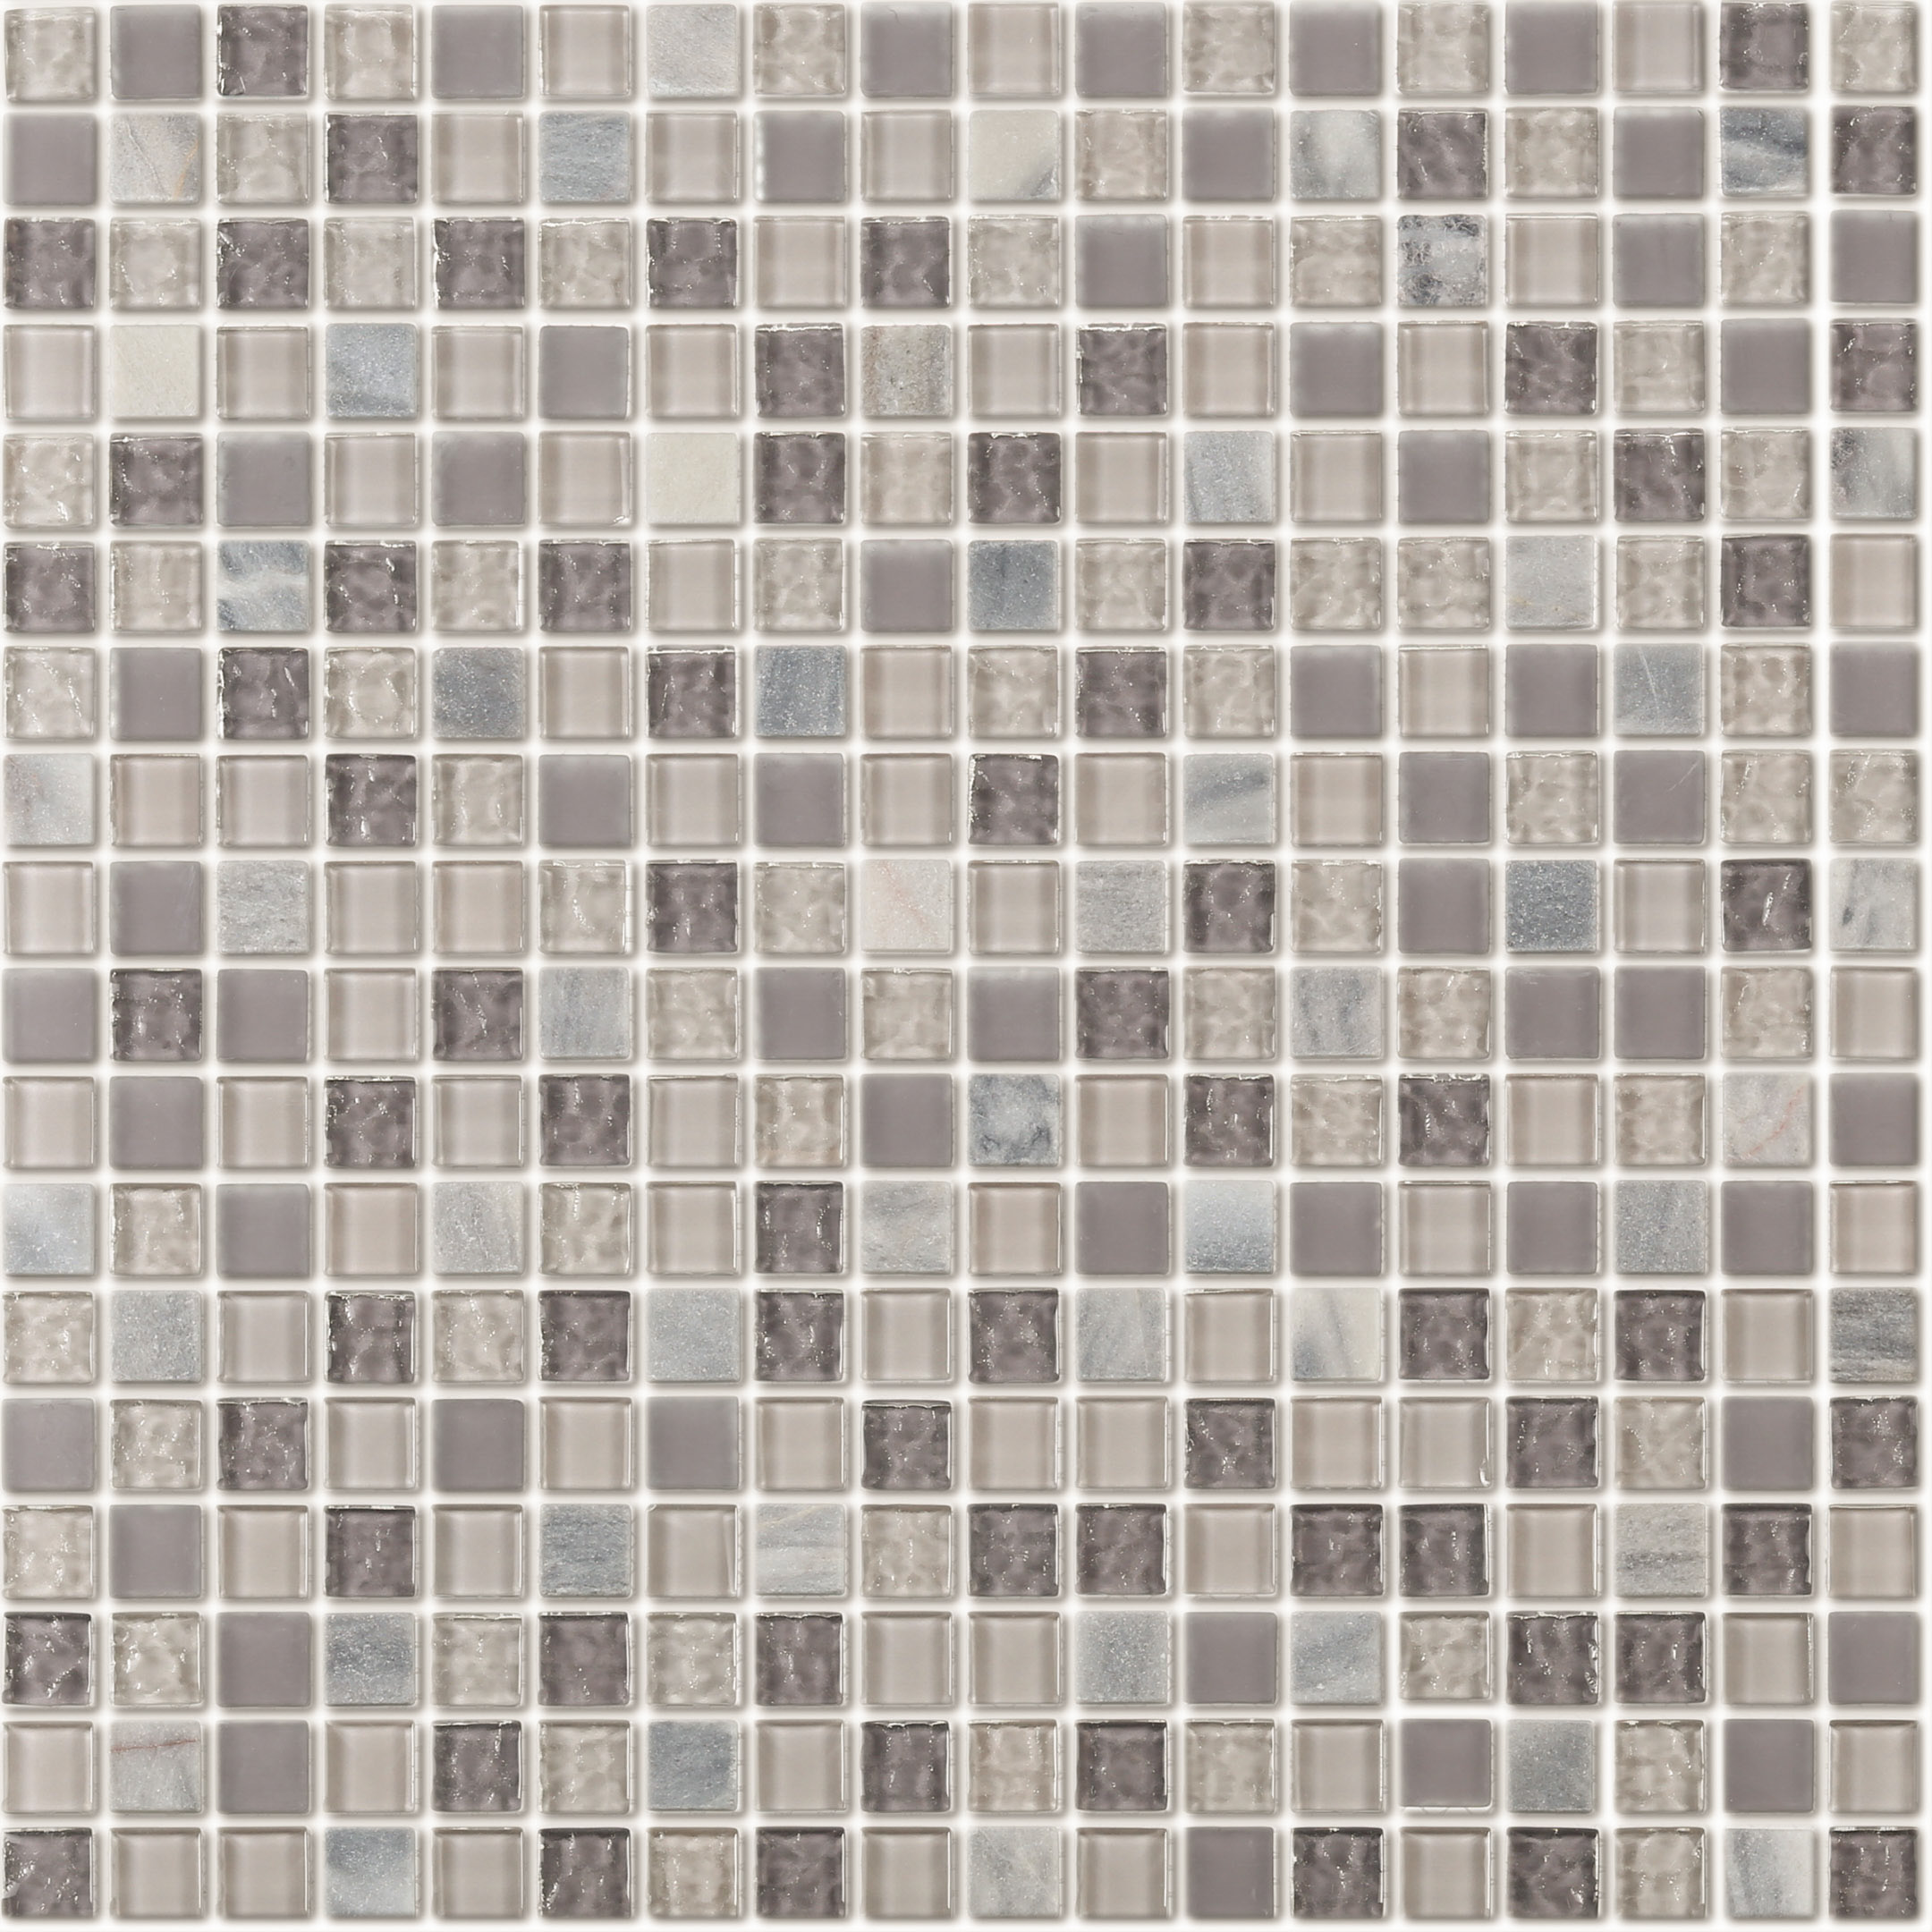 Мозаика Lavelly Elements Light Grey Mix серый микс из стекла и камня 305х305х8 мм